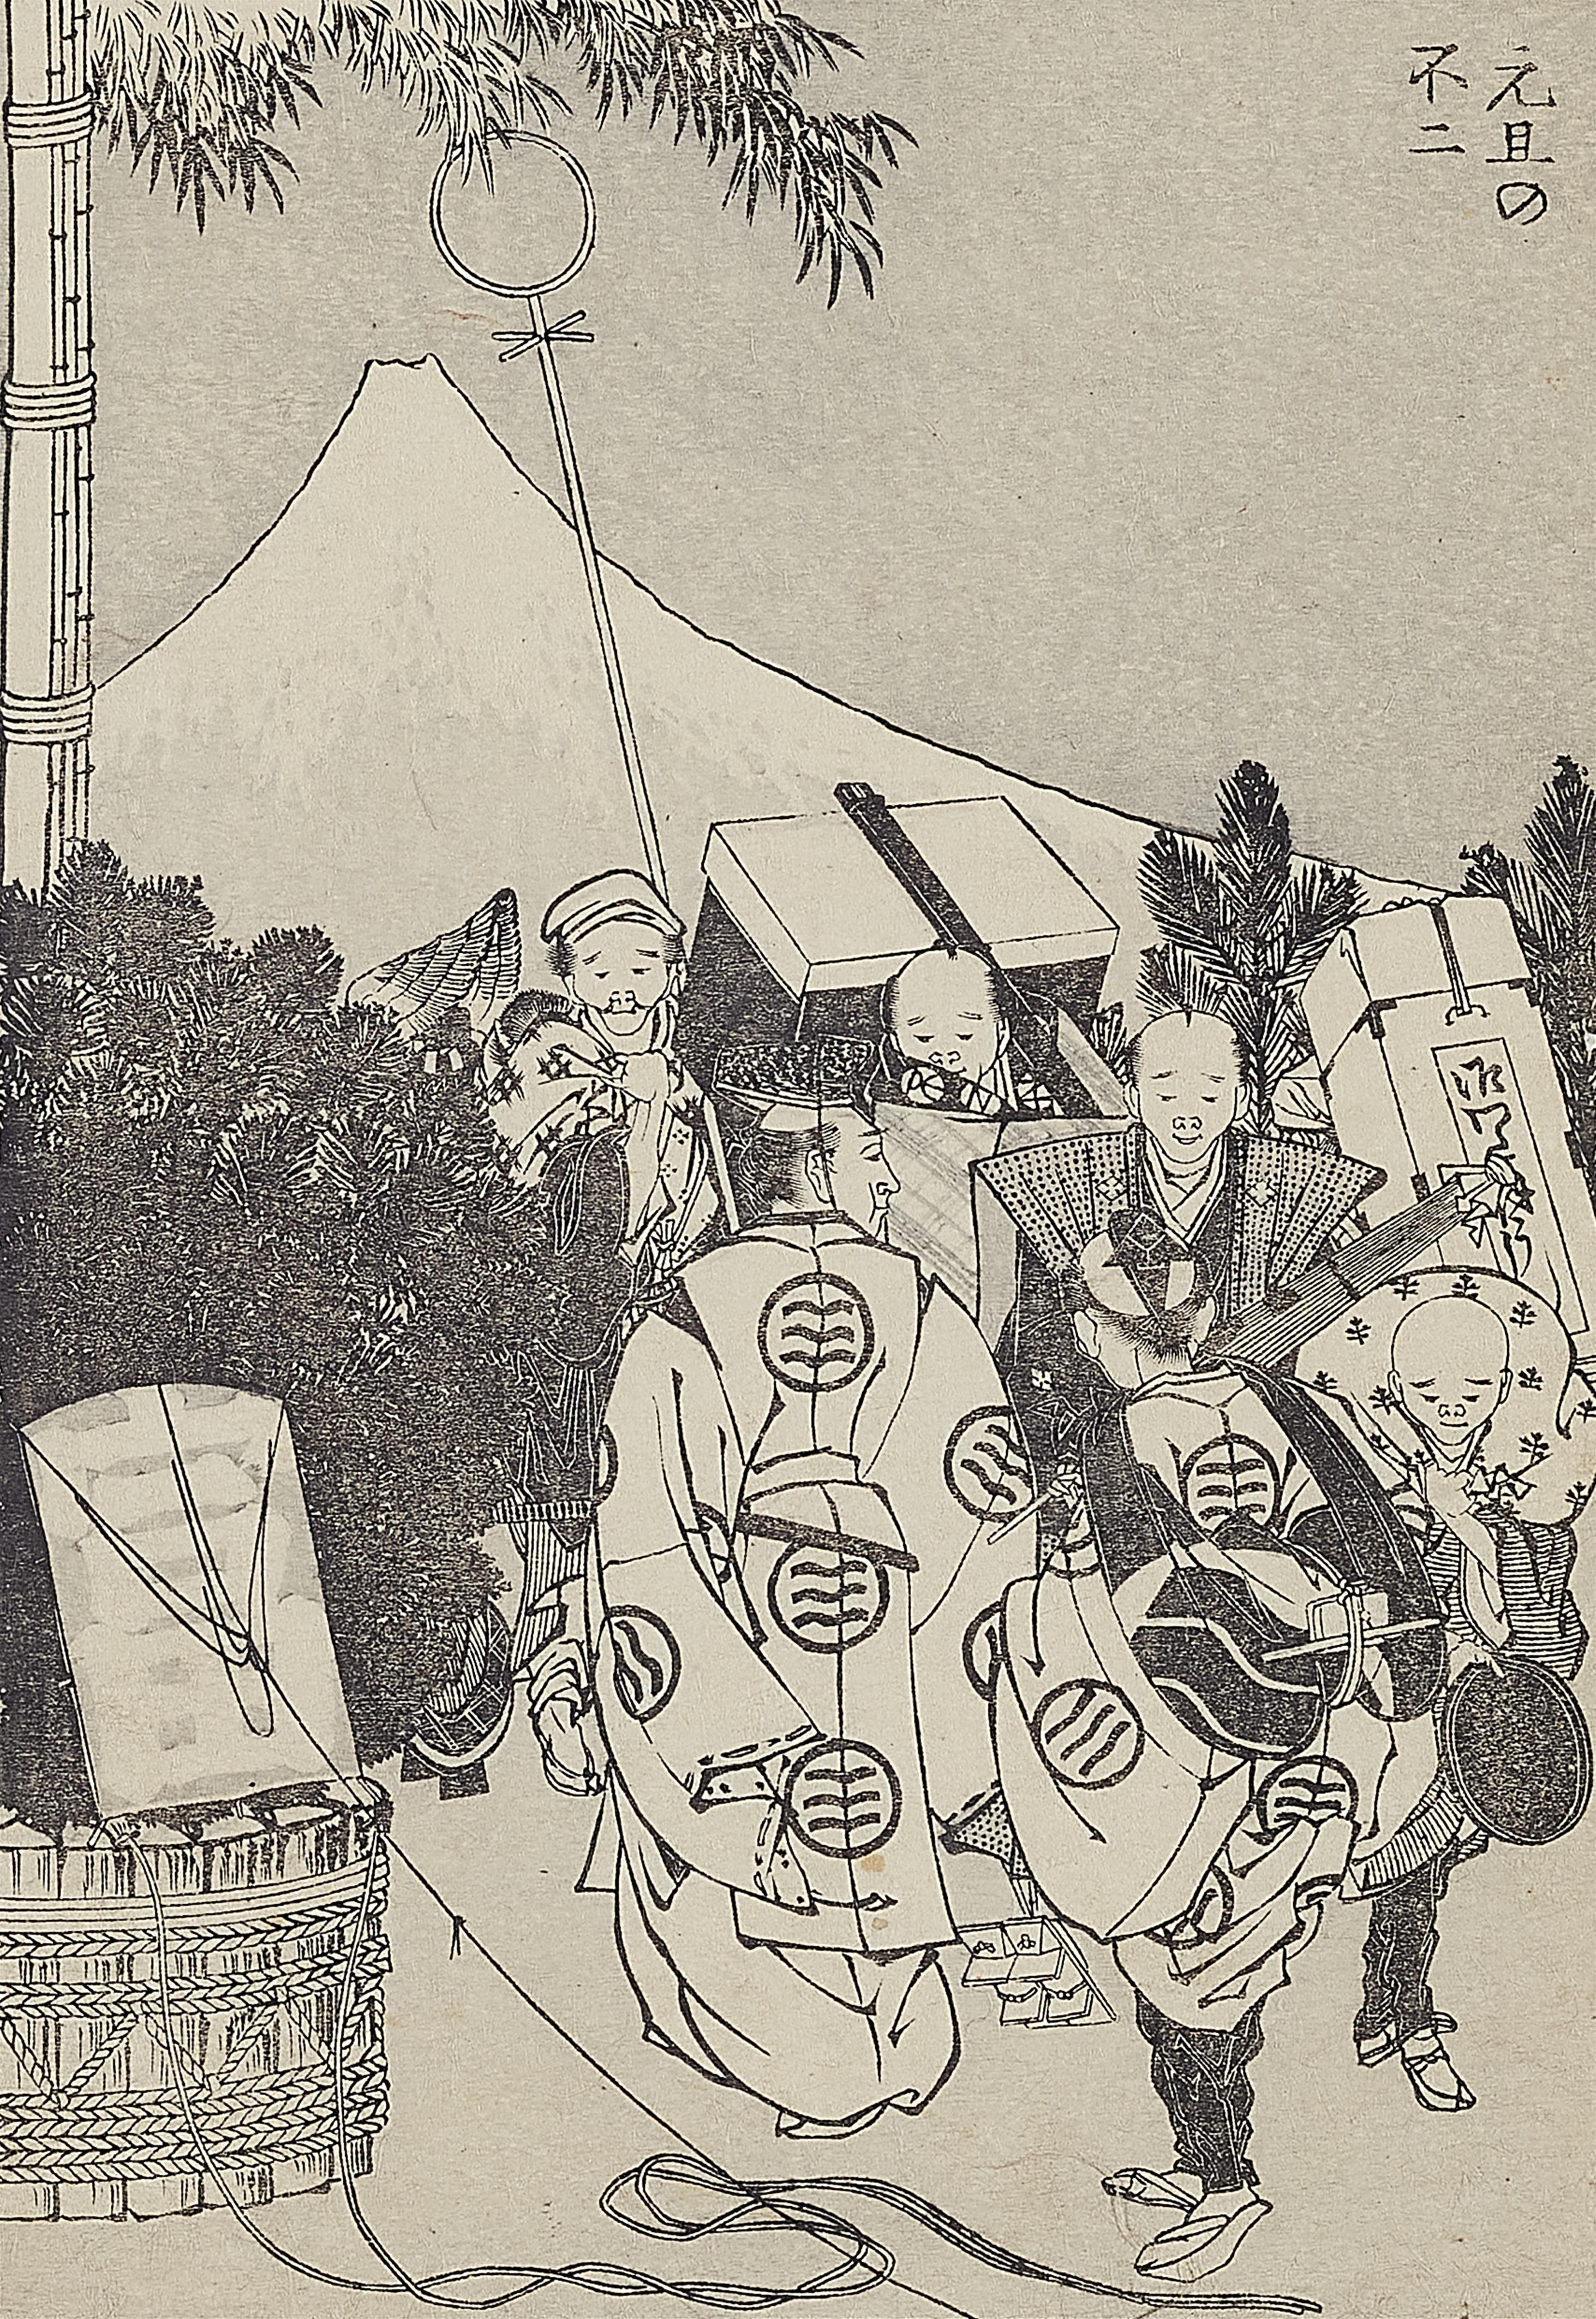 Katsushika Hokusai - Black and white illustrations from the album Fugaku hyakkei - image-24